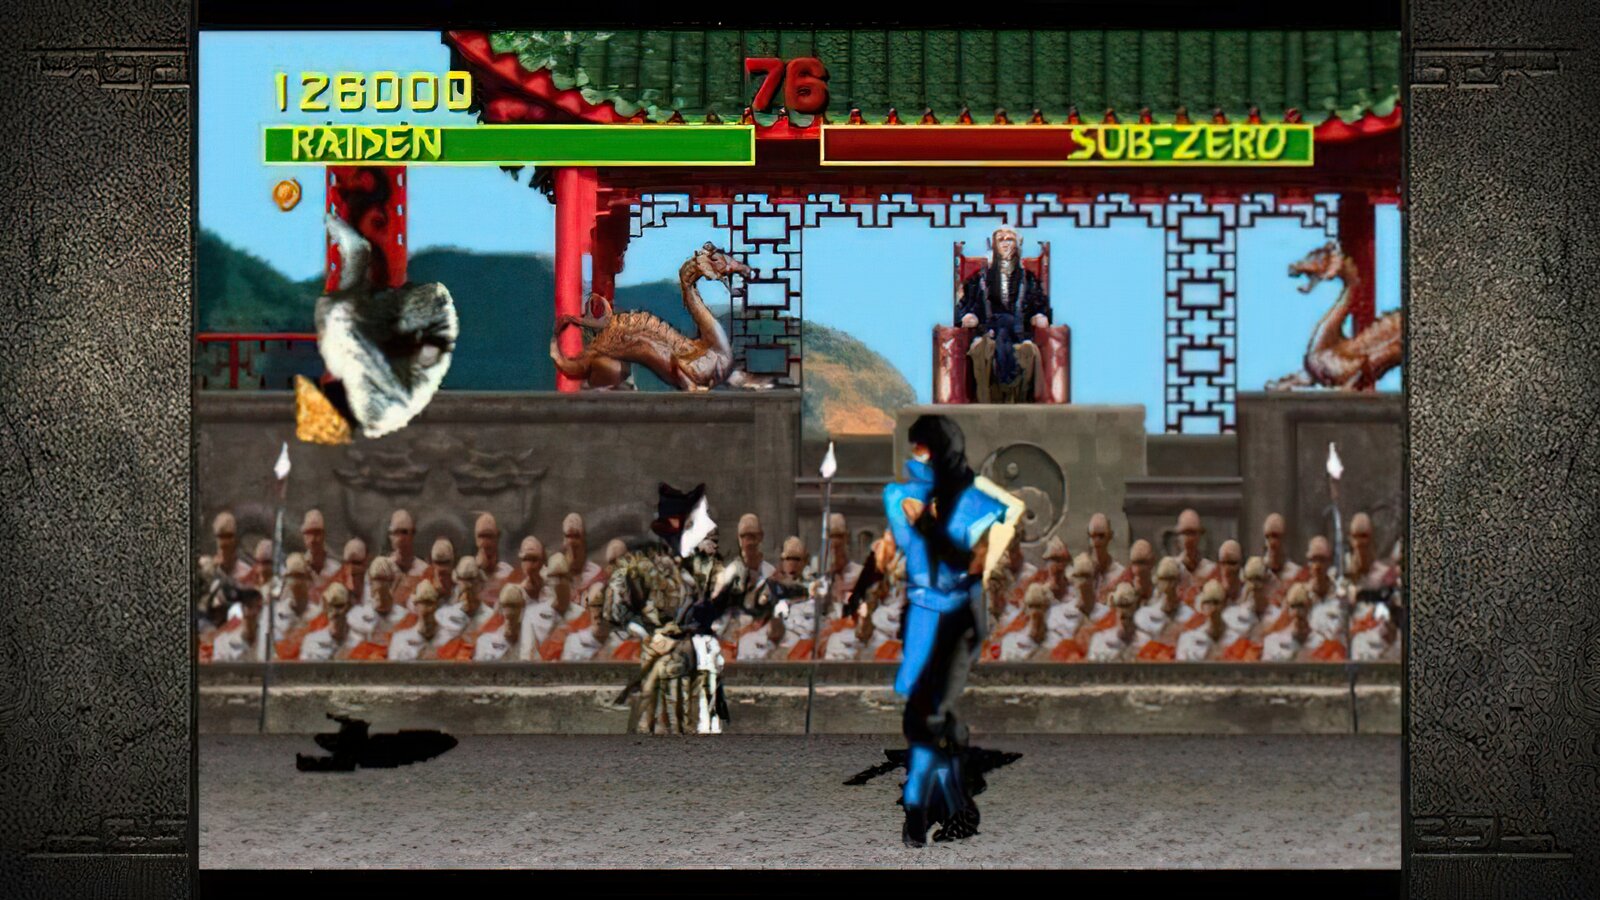 Mortal Kombat - Arcade Kollection